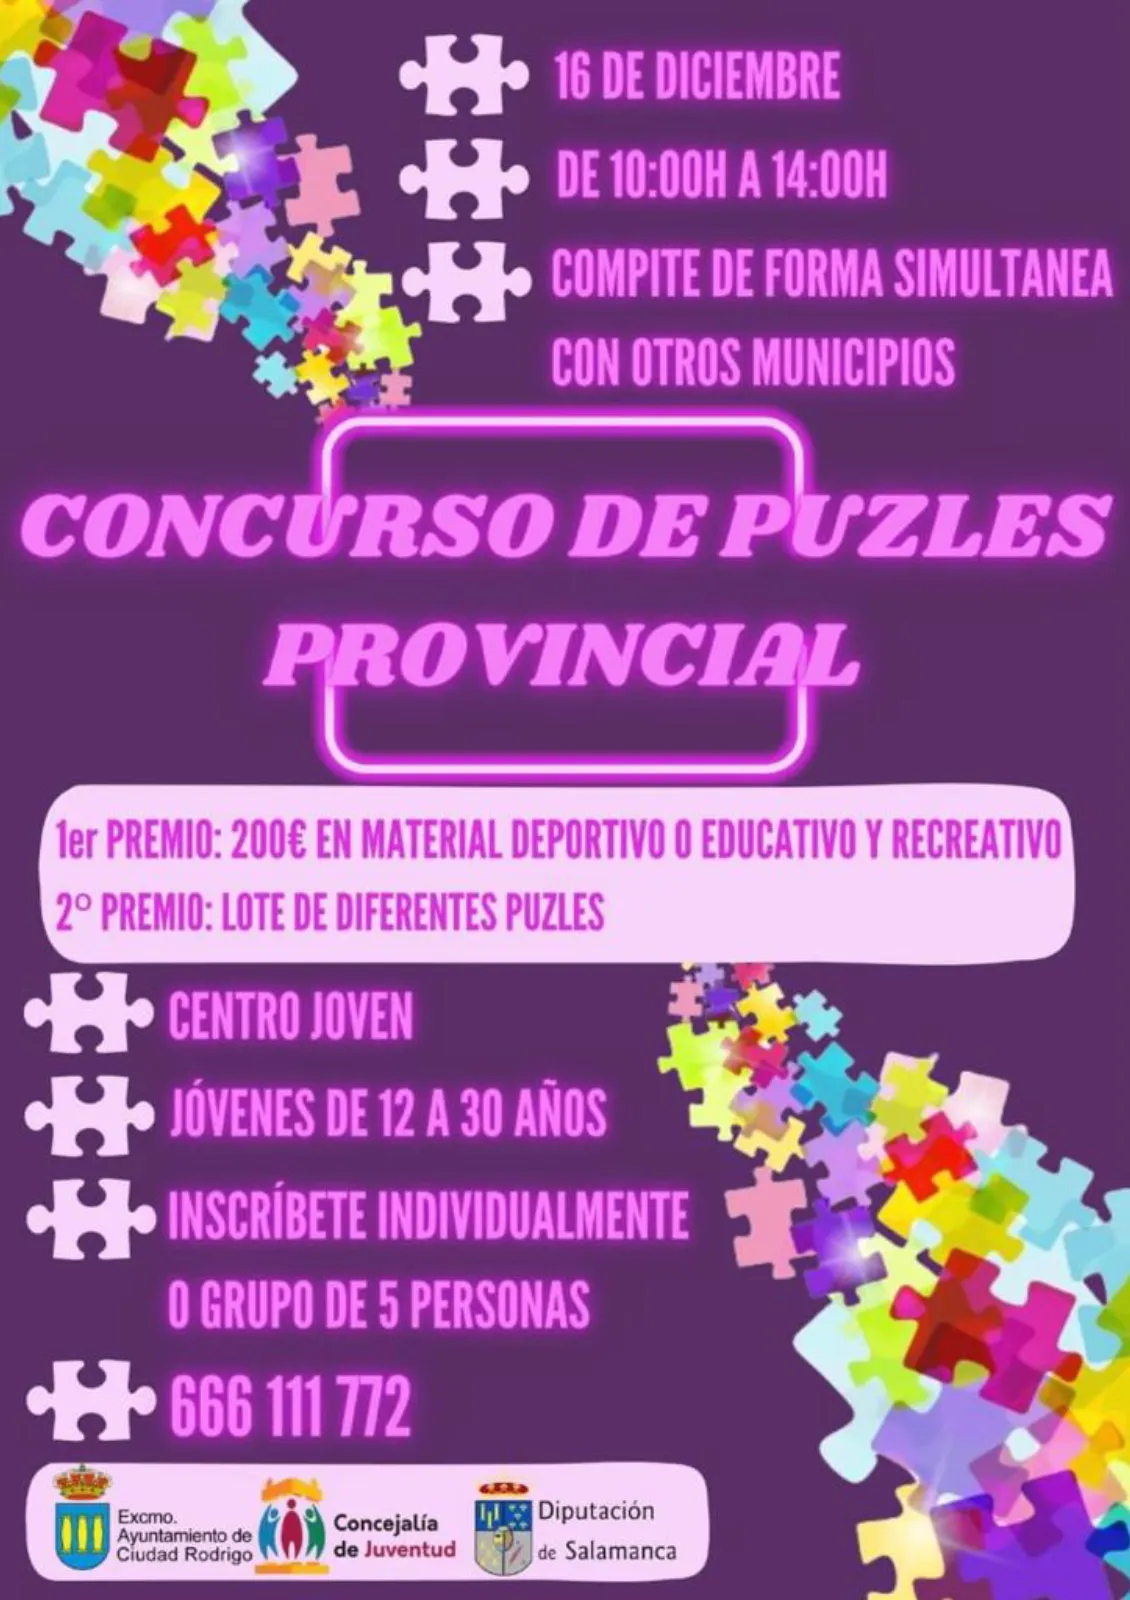 Concurso de puzles provincial